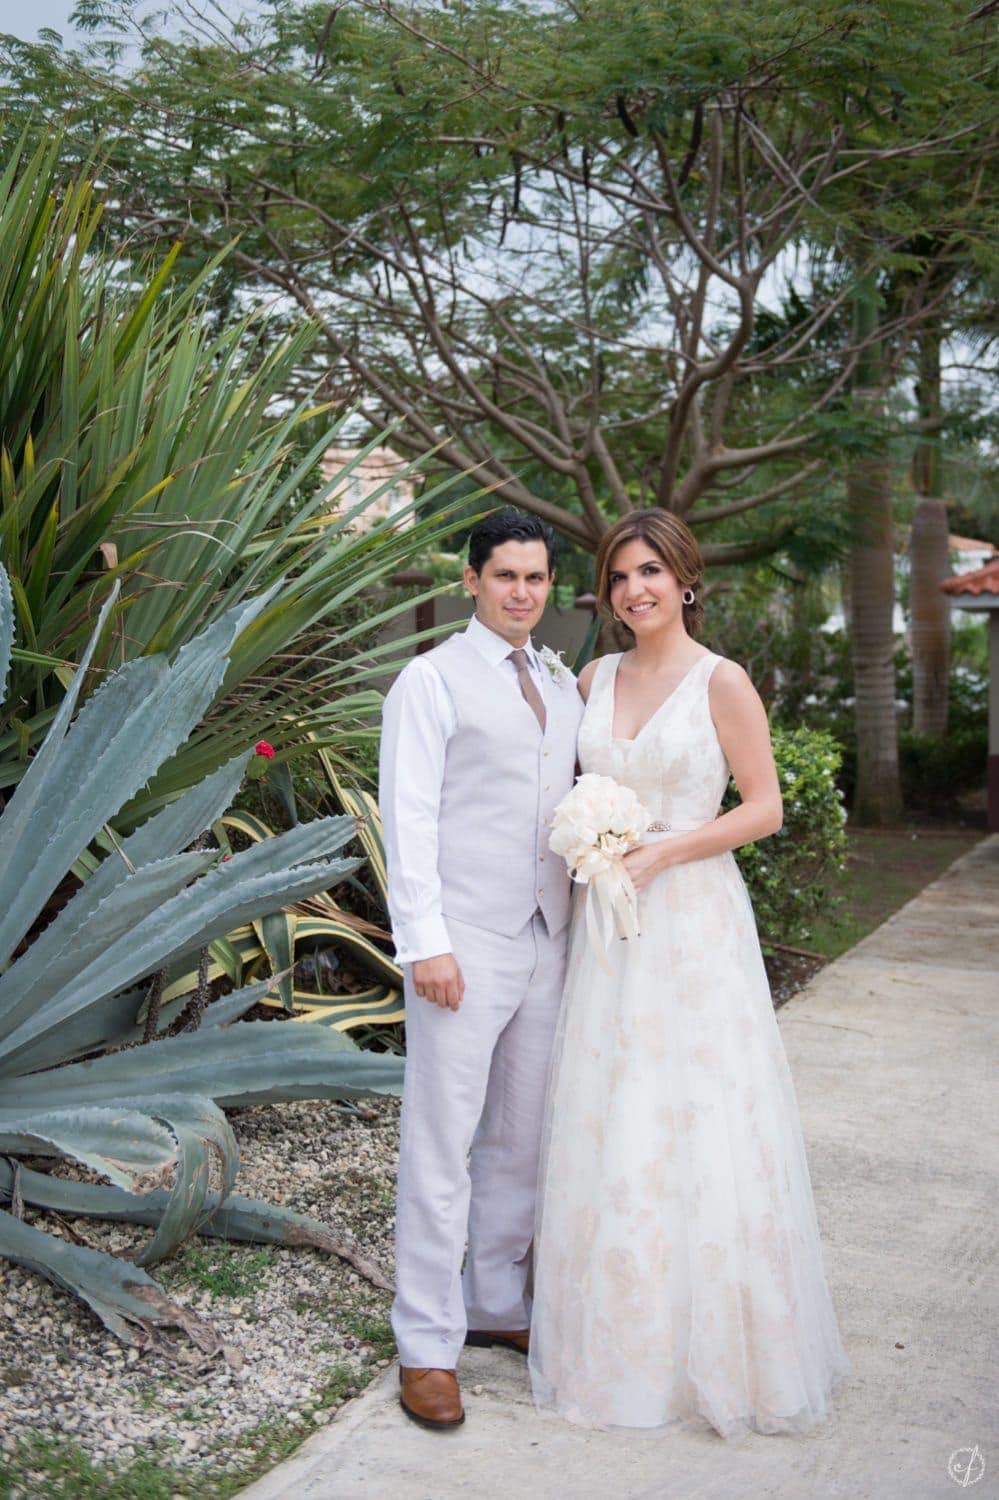 Coconut Palm Inn Destination Beach Wedding at Rincon Puerto Rico by Photographer Camille Fontanez